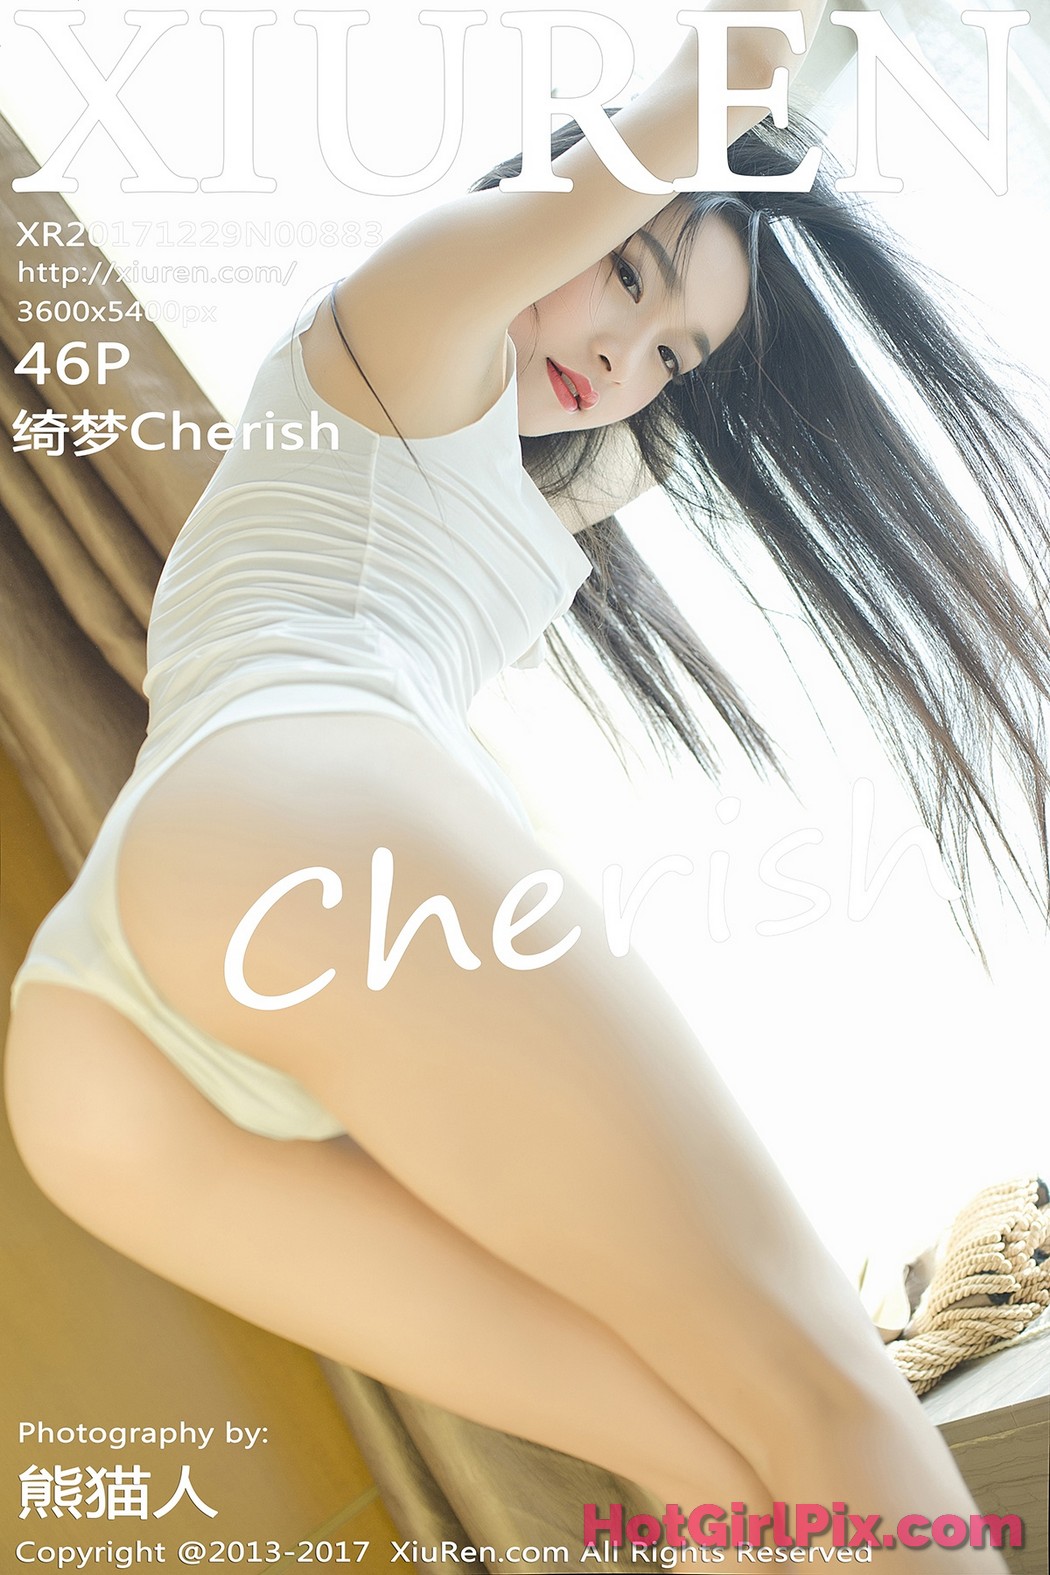 [XIUREN] No.883 Qi Meng 绮梦Cherish Cover Photo